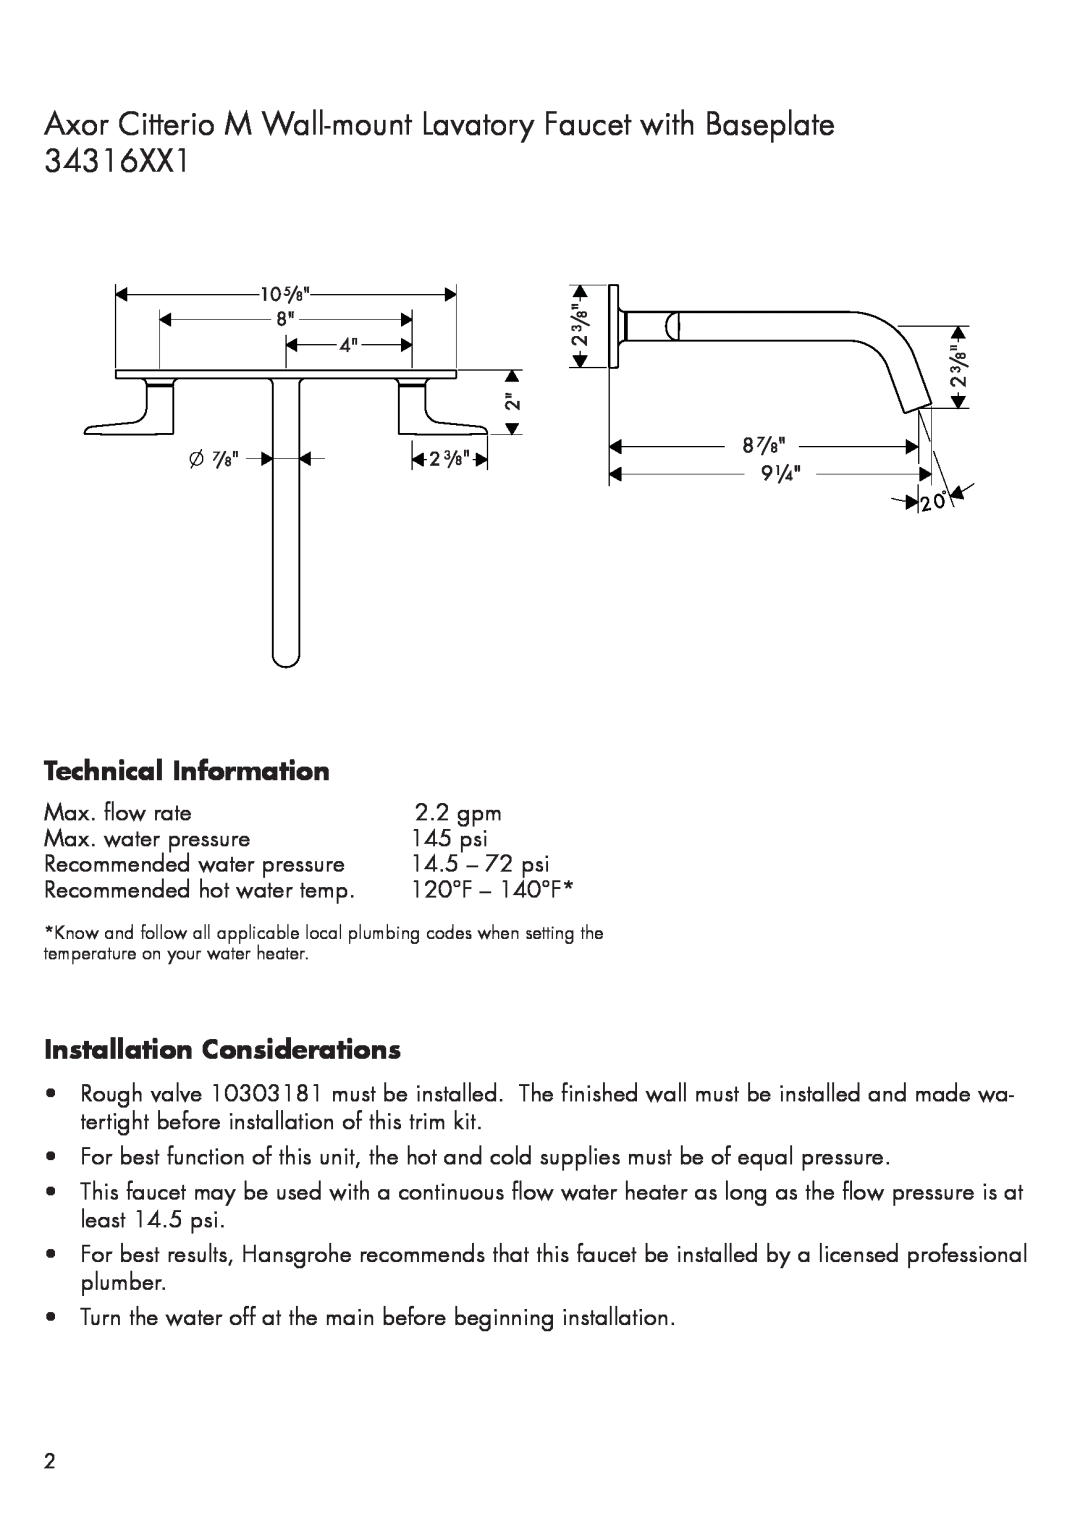 Axor 34316XX1 installation instructions Technical Information, Installation Considerations 